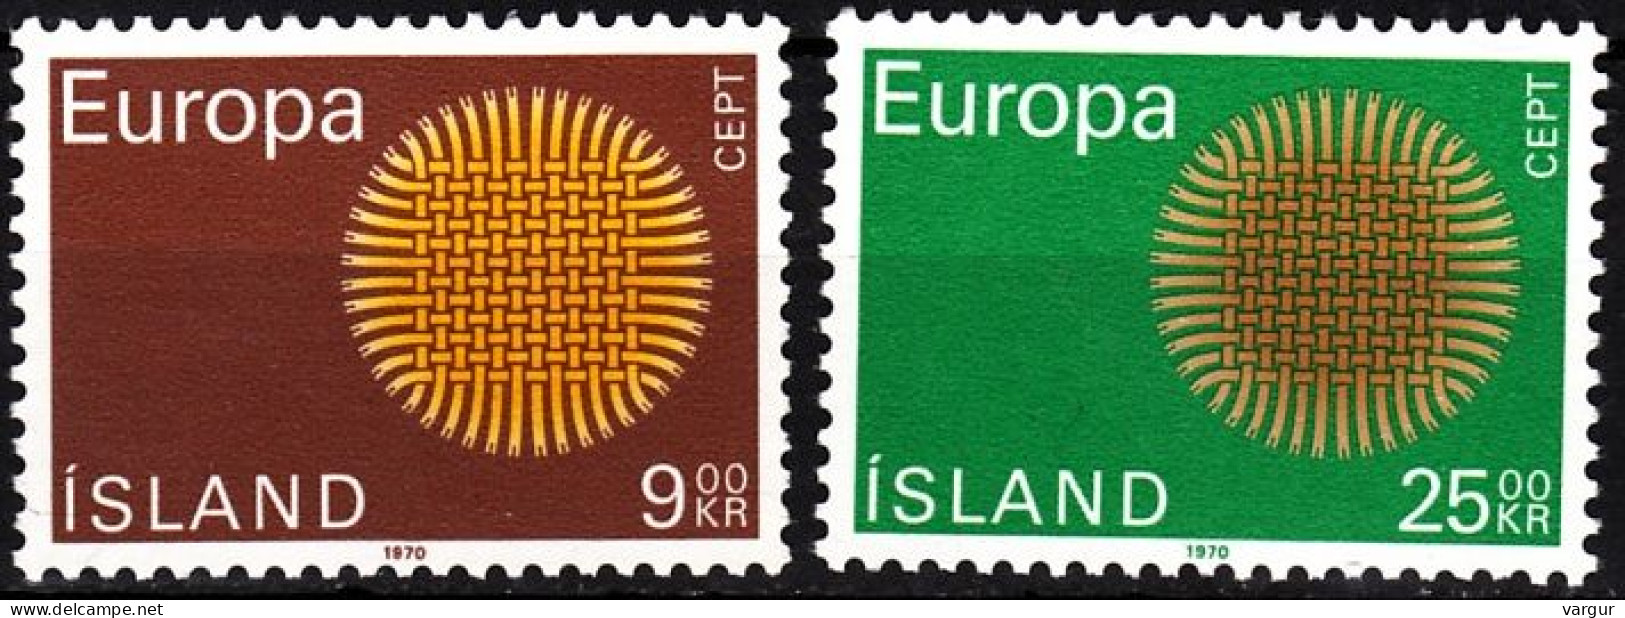 ICELAND / ISLAND 1970 EUROPA. Complete Set, MNH - 1970